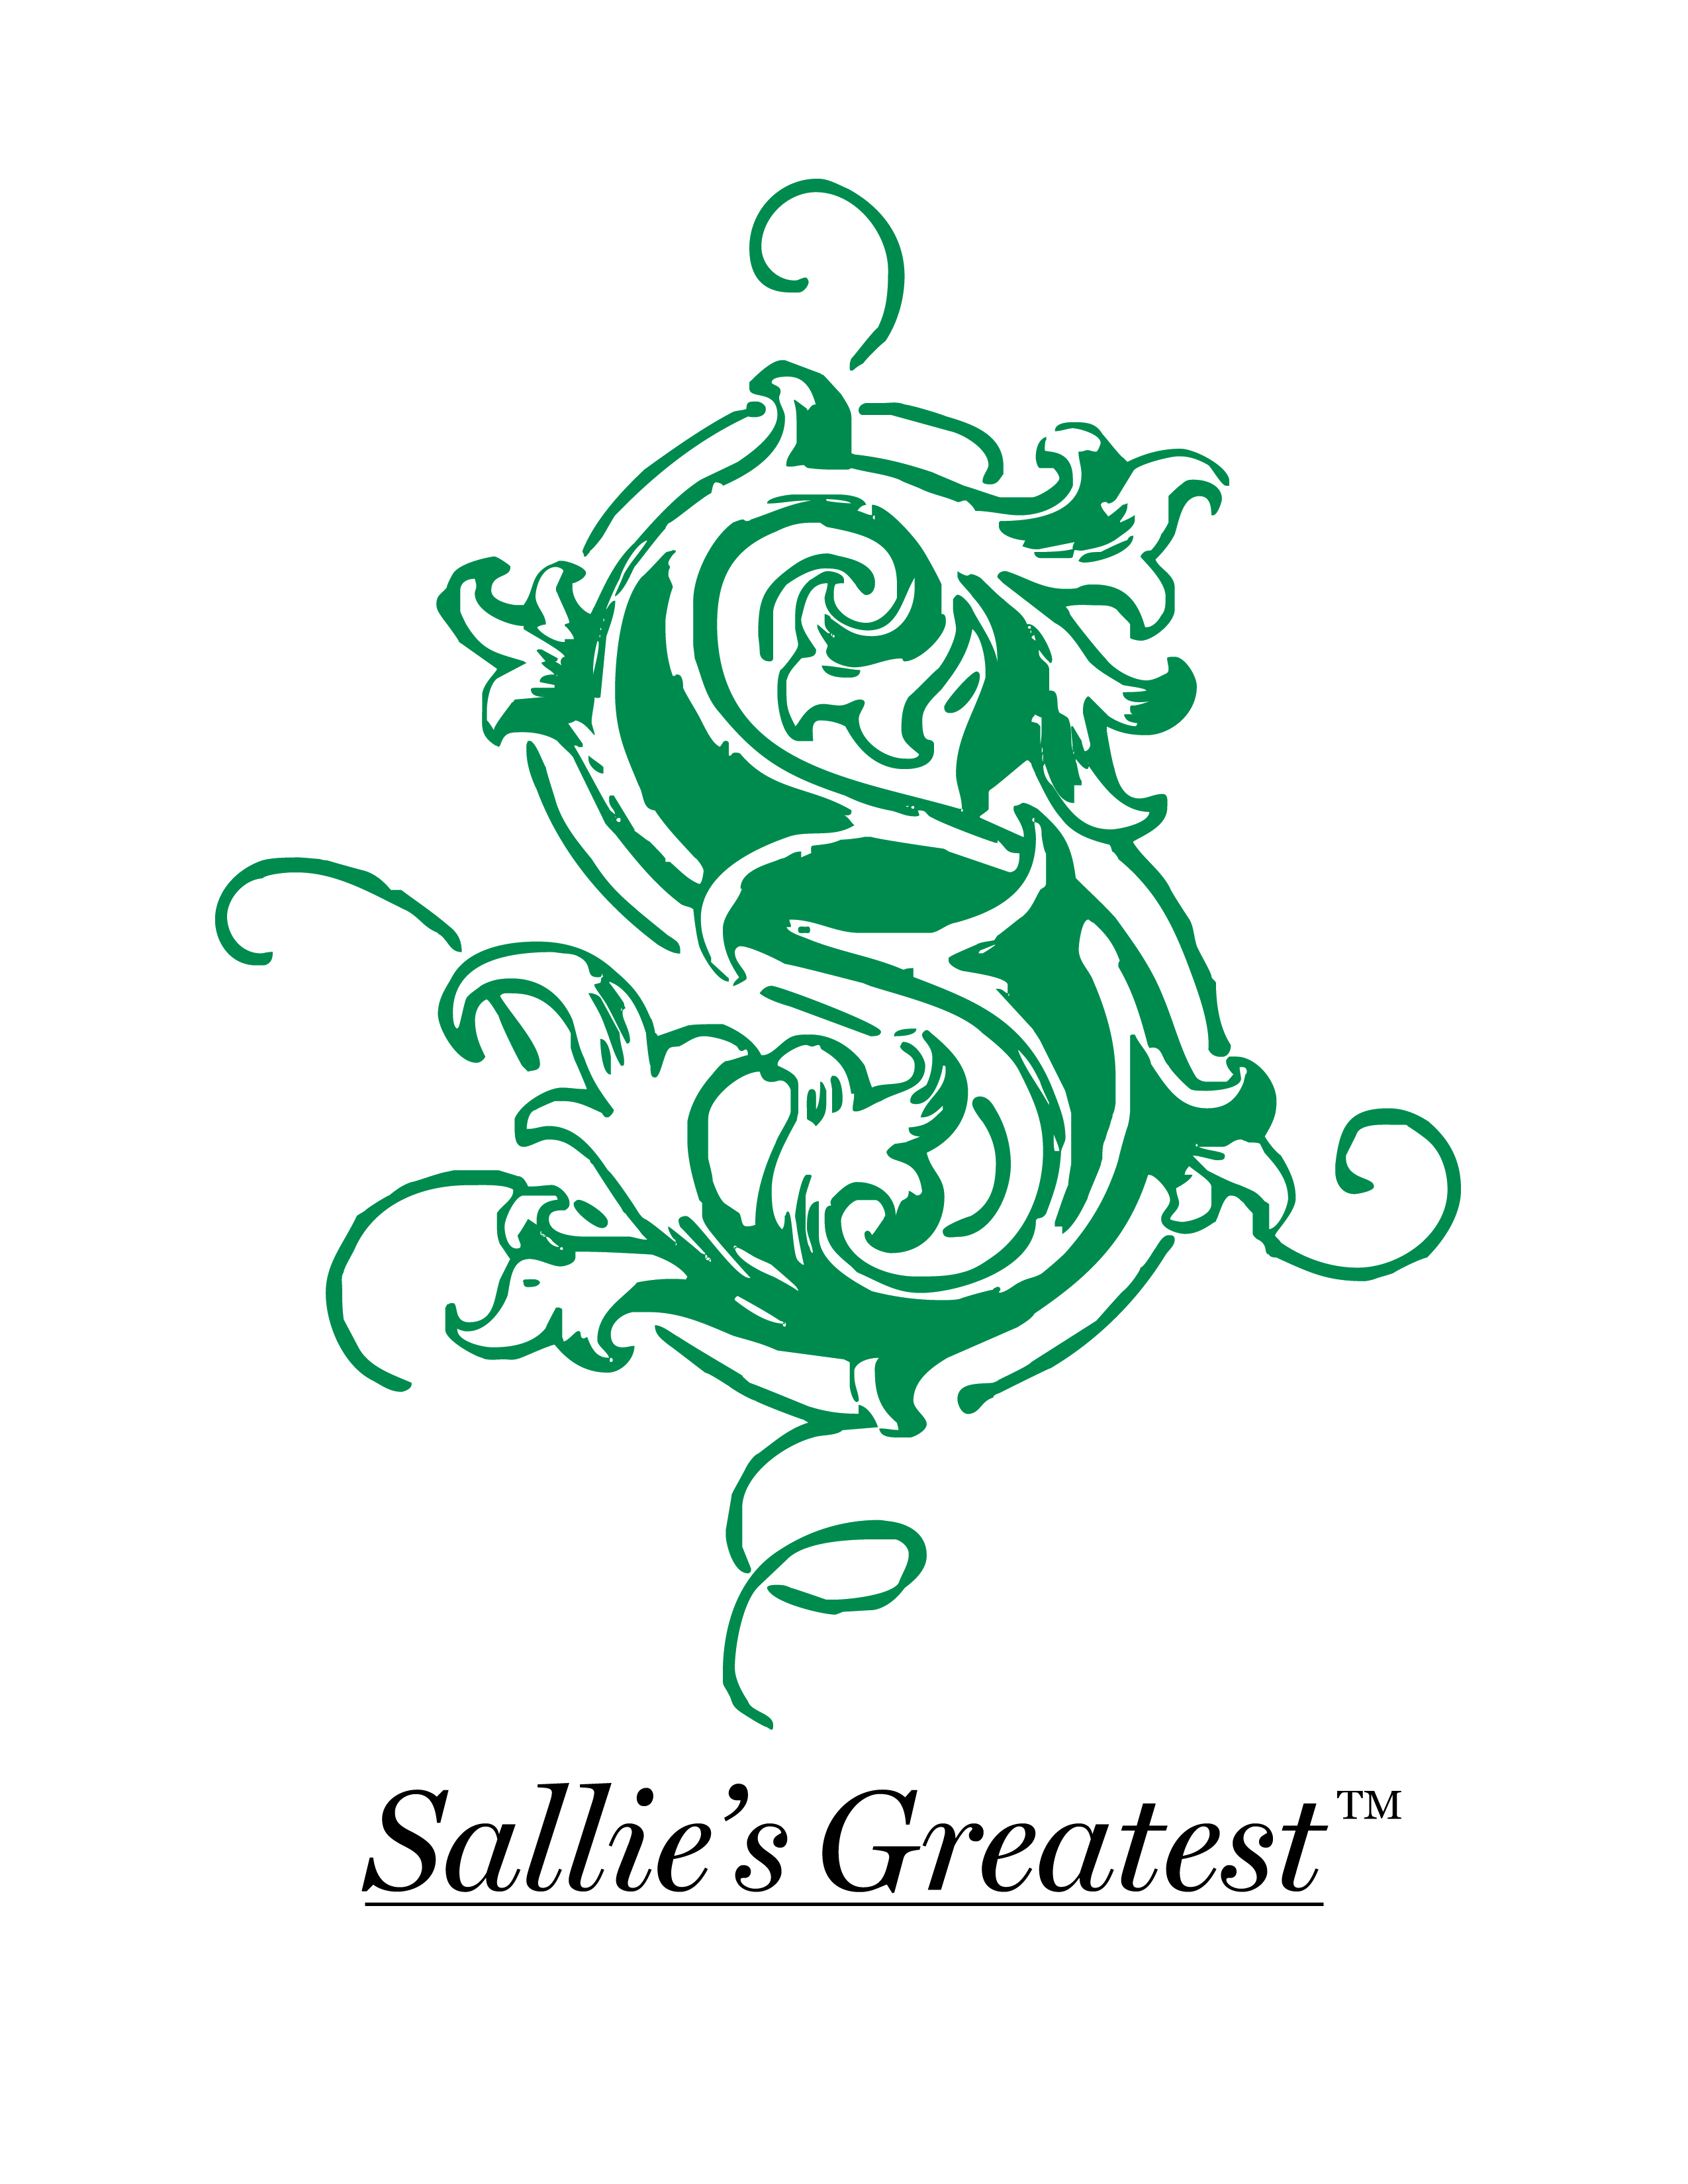 Sallie’s Greatest